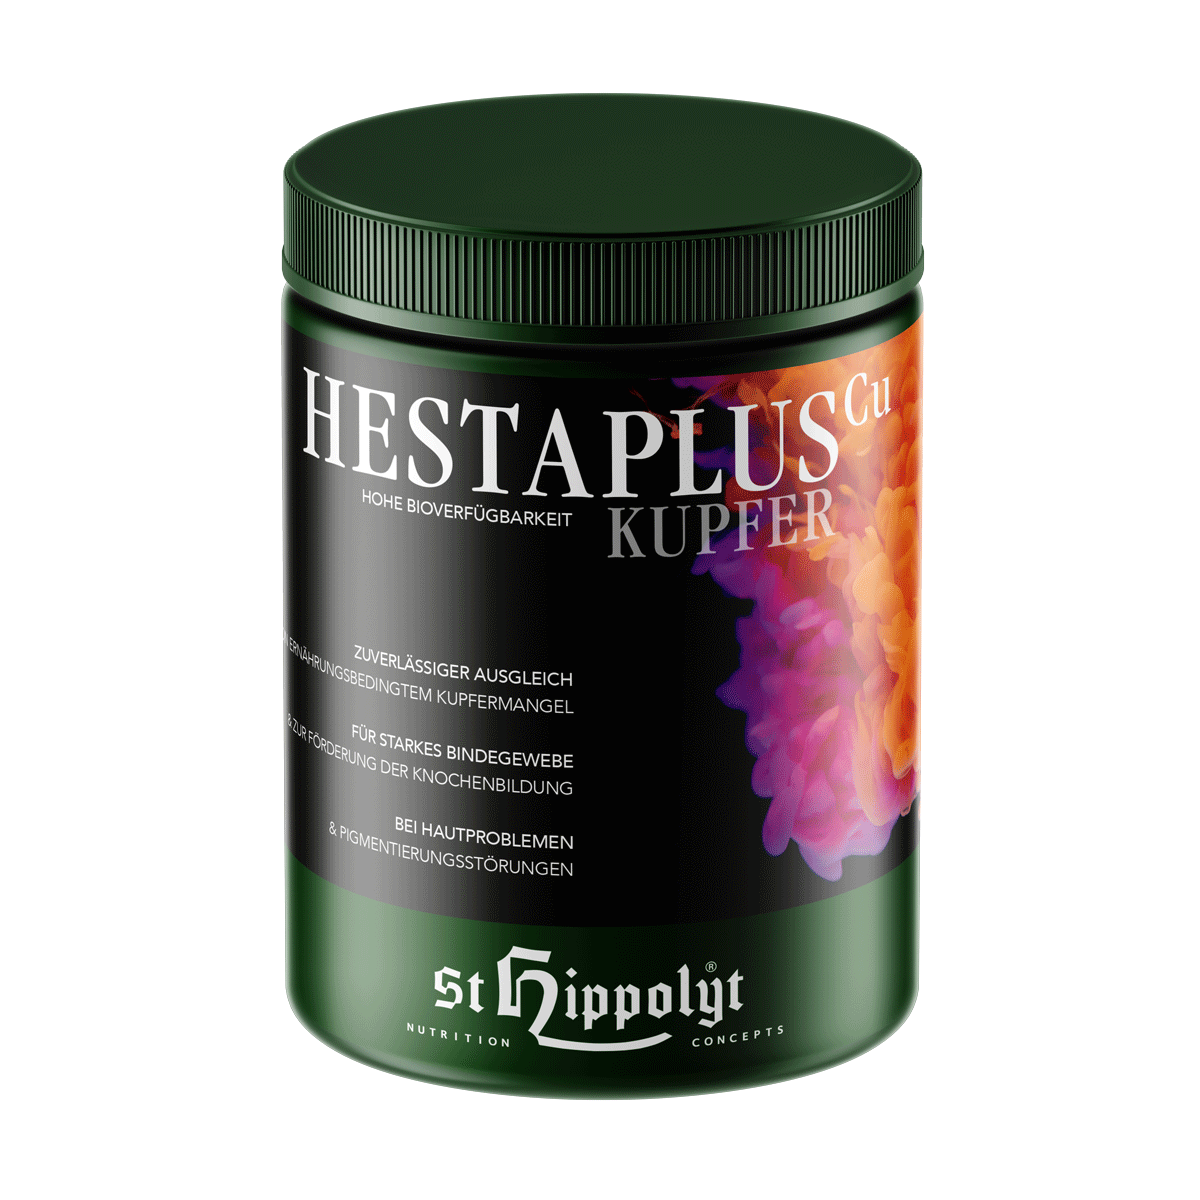 St. Hippolyt HESTA-Plus KUPFER 1kg